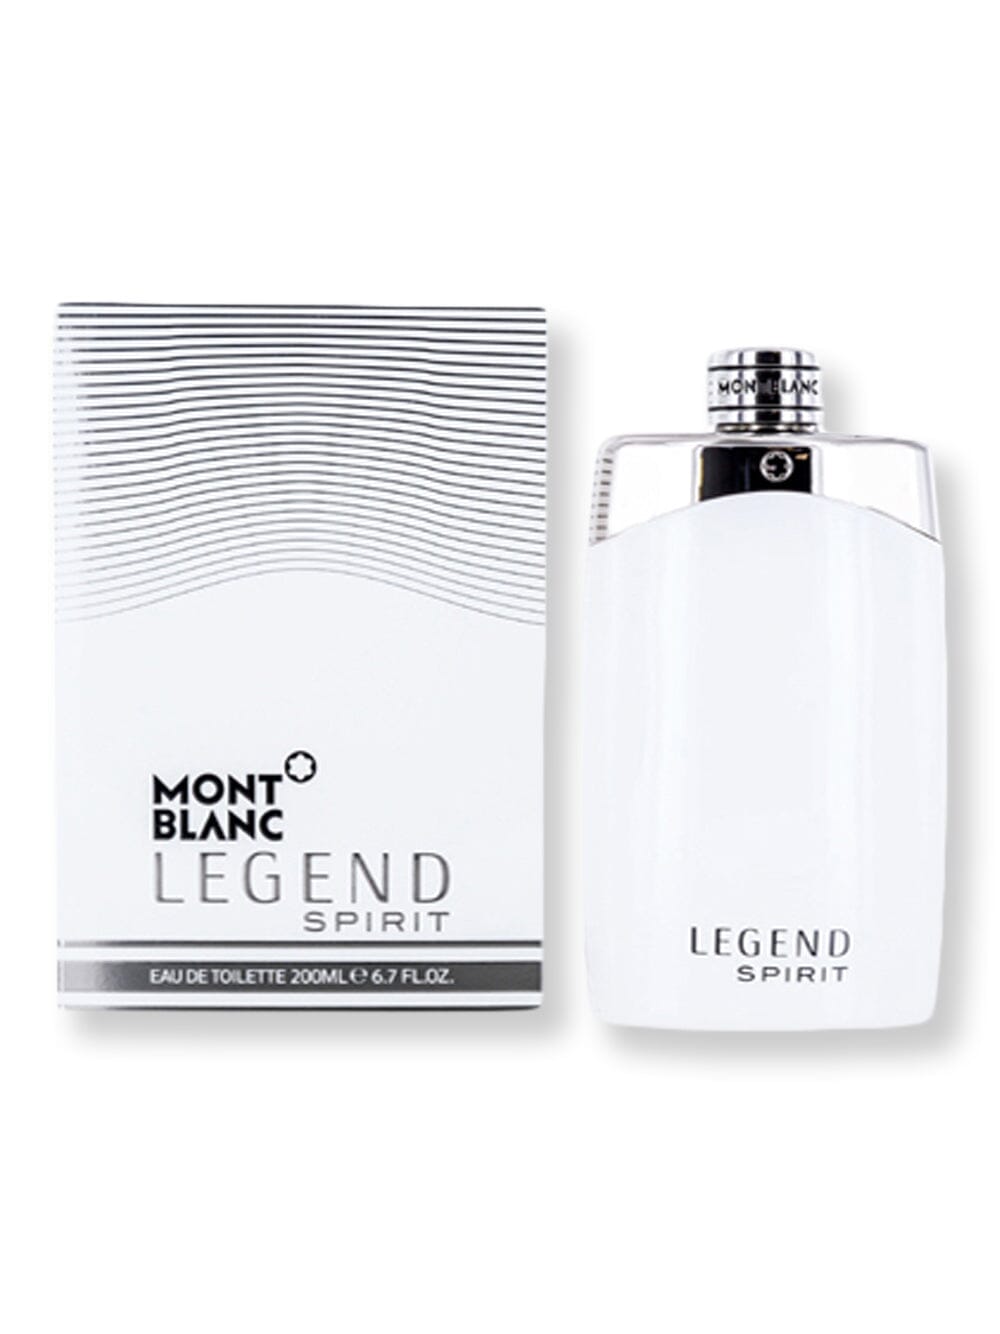 Montblanc Montblanc Legend Spirit EDT Spray 6.7 oz200 ml Perfume 